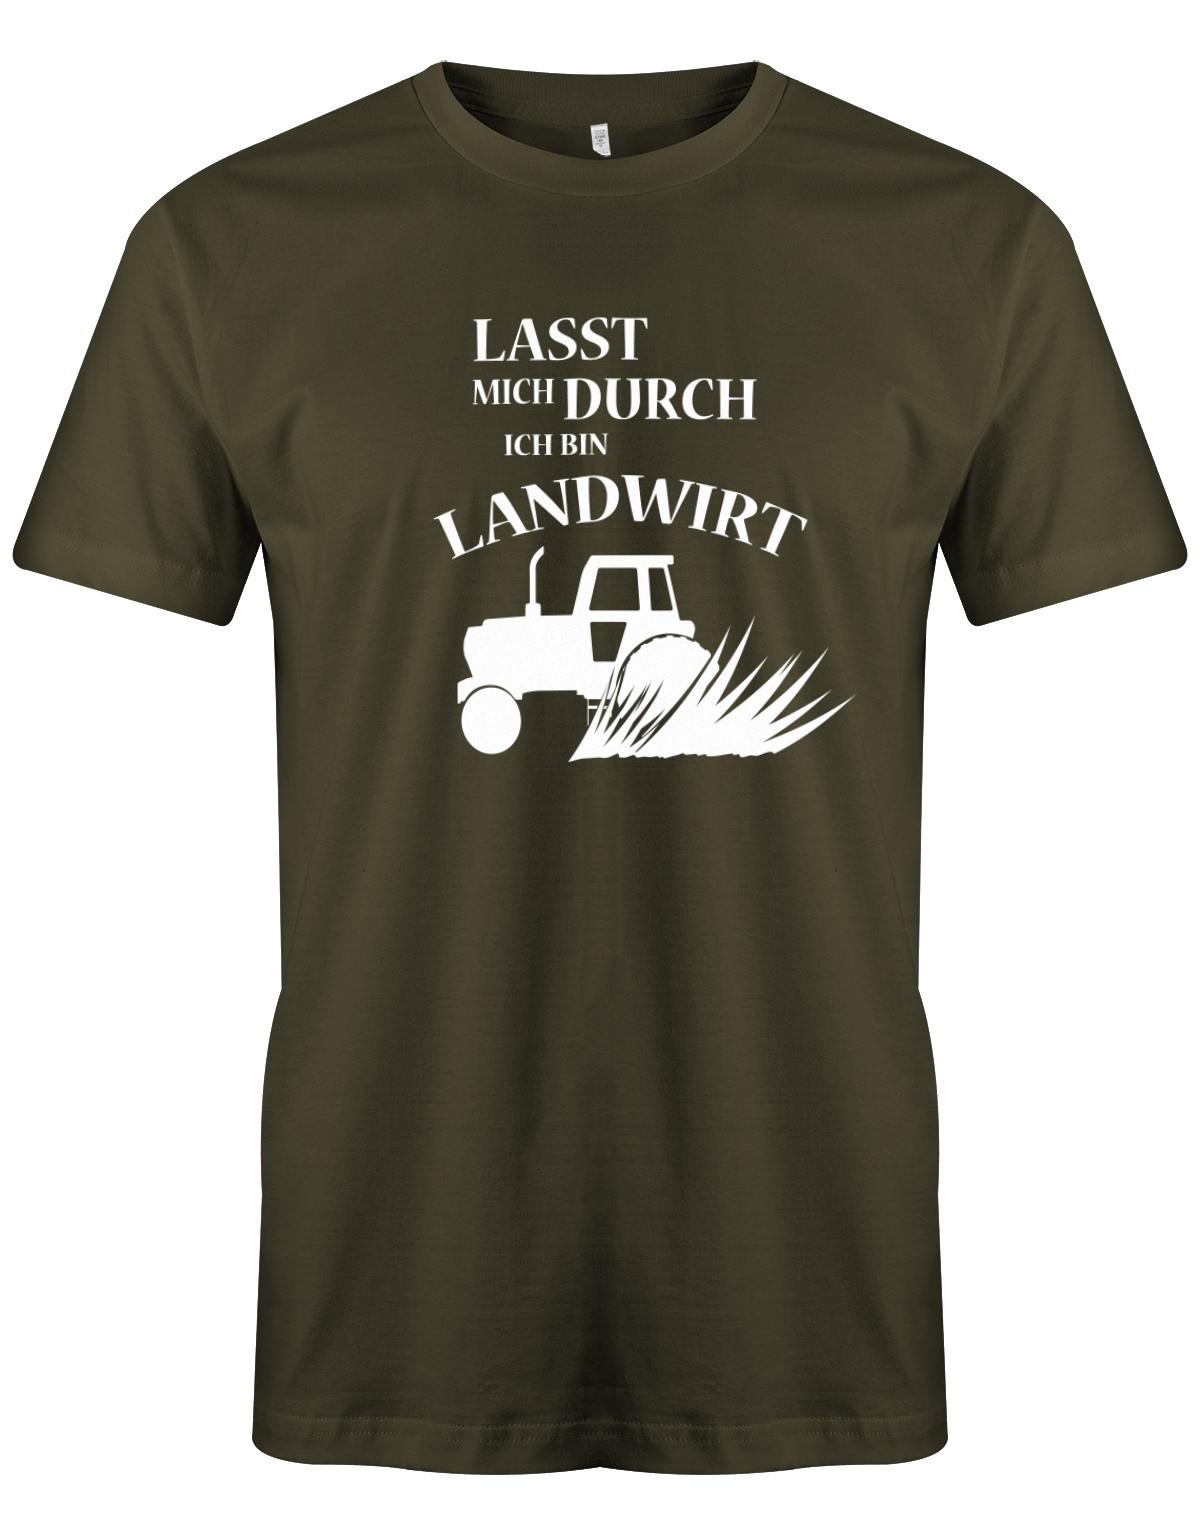 Landwirtschaft Shirt Männer - Lasst mich durch, ich bin Landwirt. Traktor Army